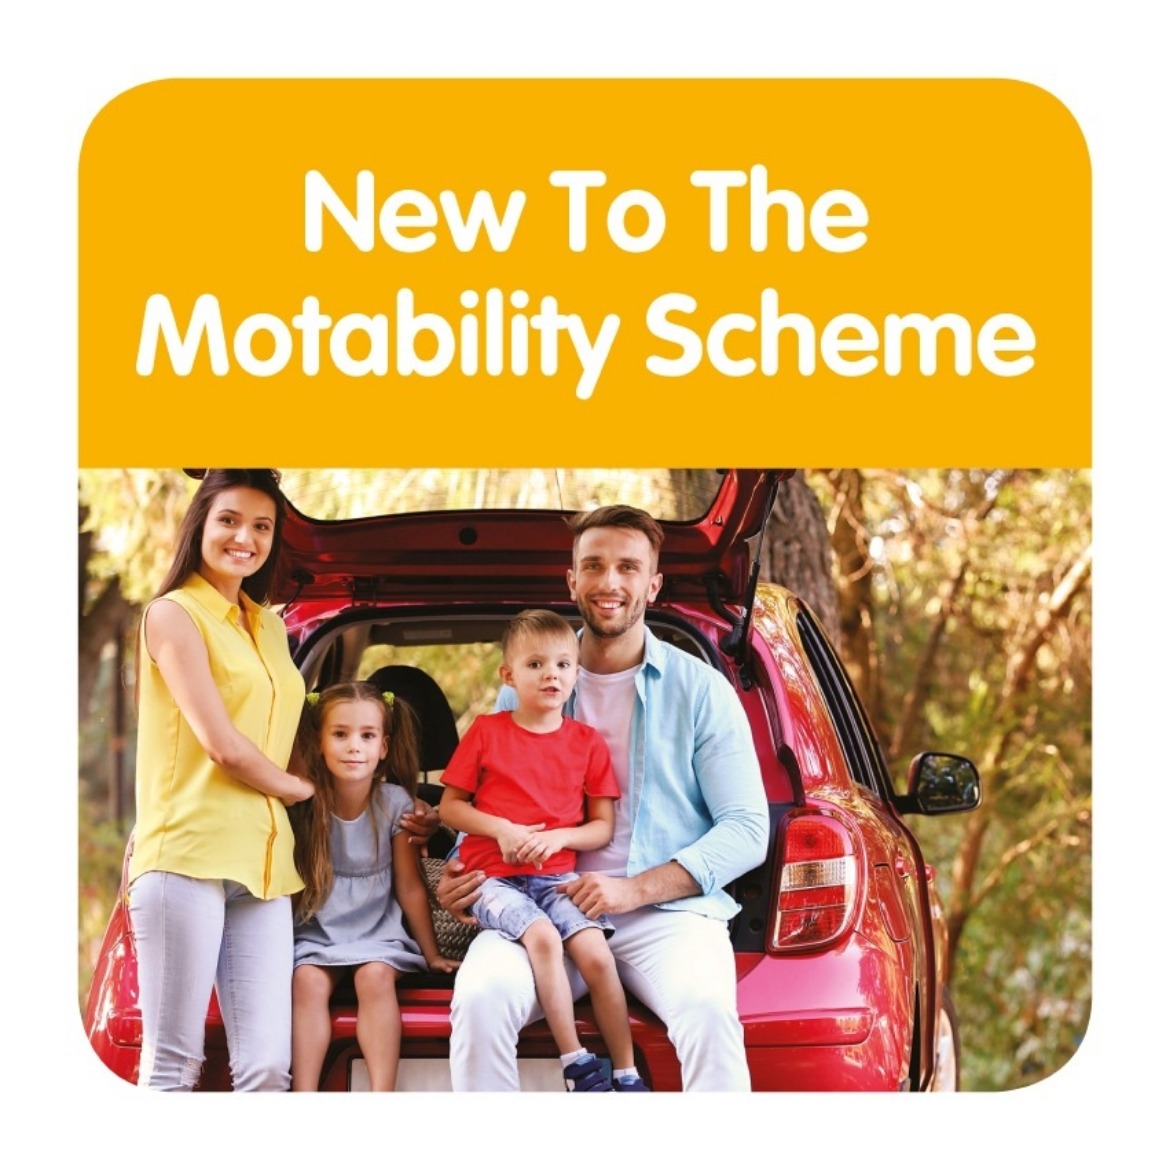 New to the Motability Scheme